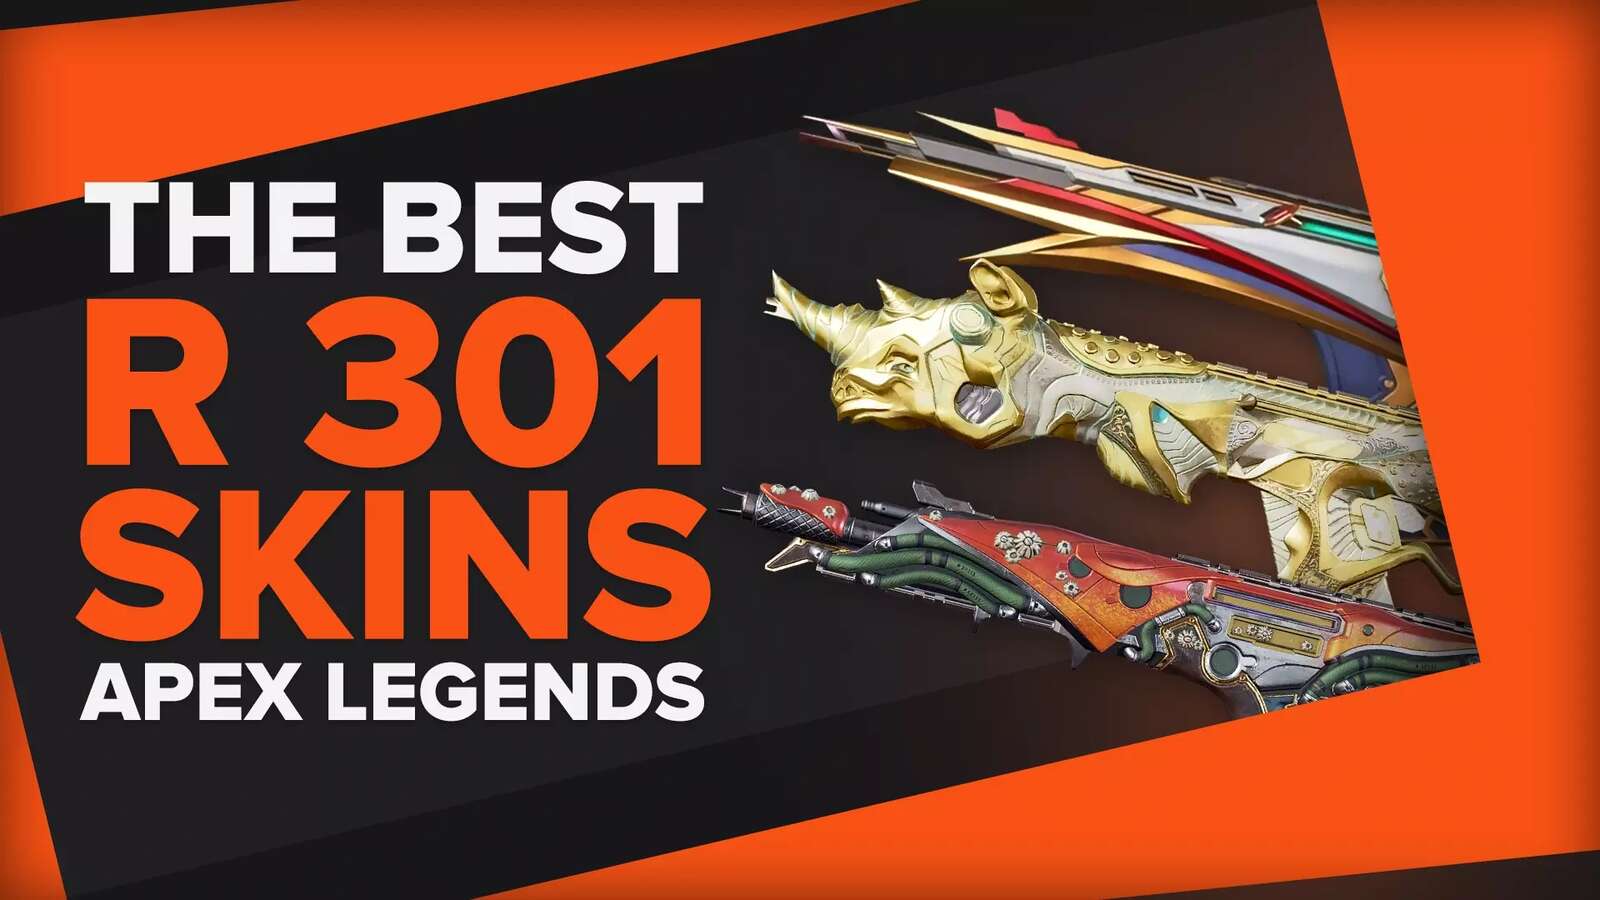 10 Best R 301 Skins in Apex Legends [Ranked]